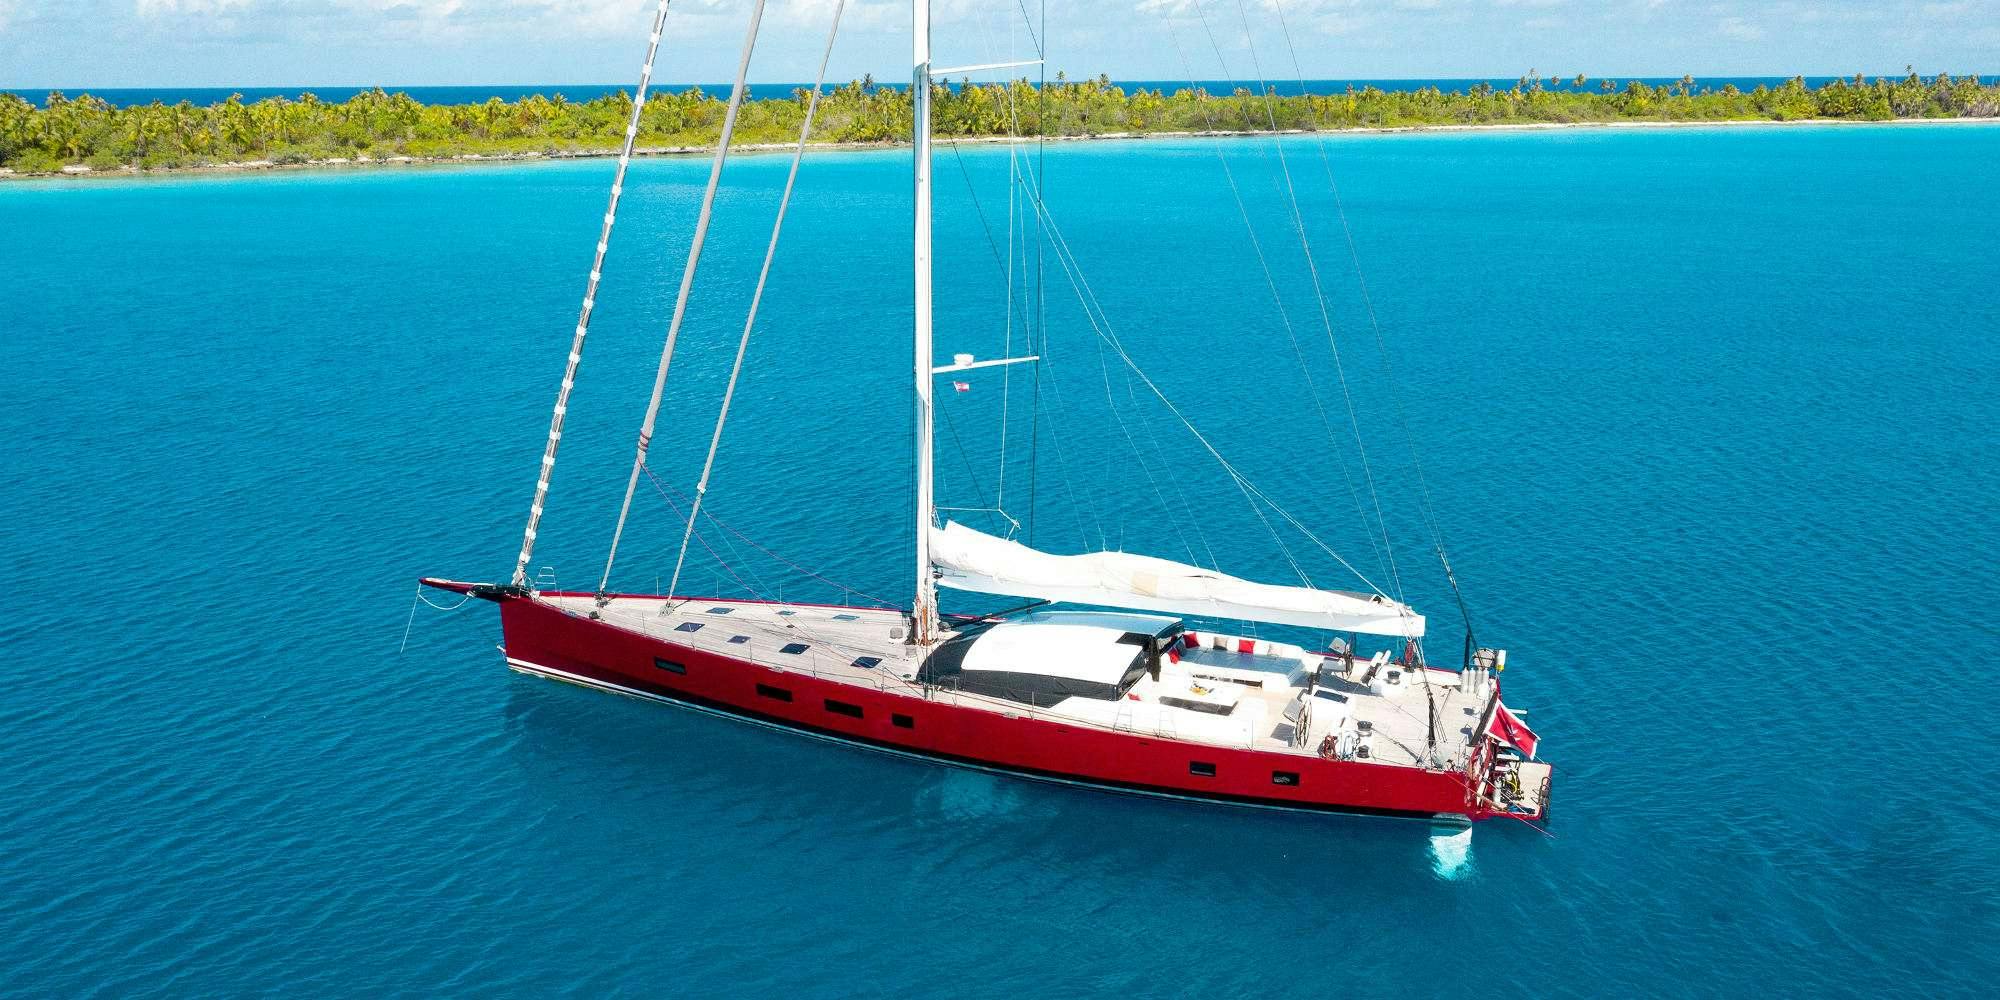 nomad iv - Sailboat Charter Corsica & Boat hire in Fr. Riviera & Tyrrhenian Sea 1